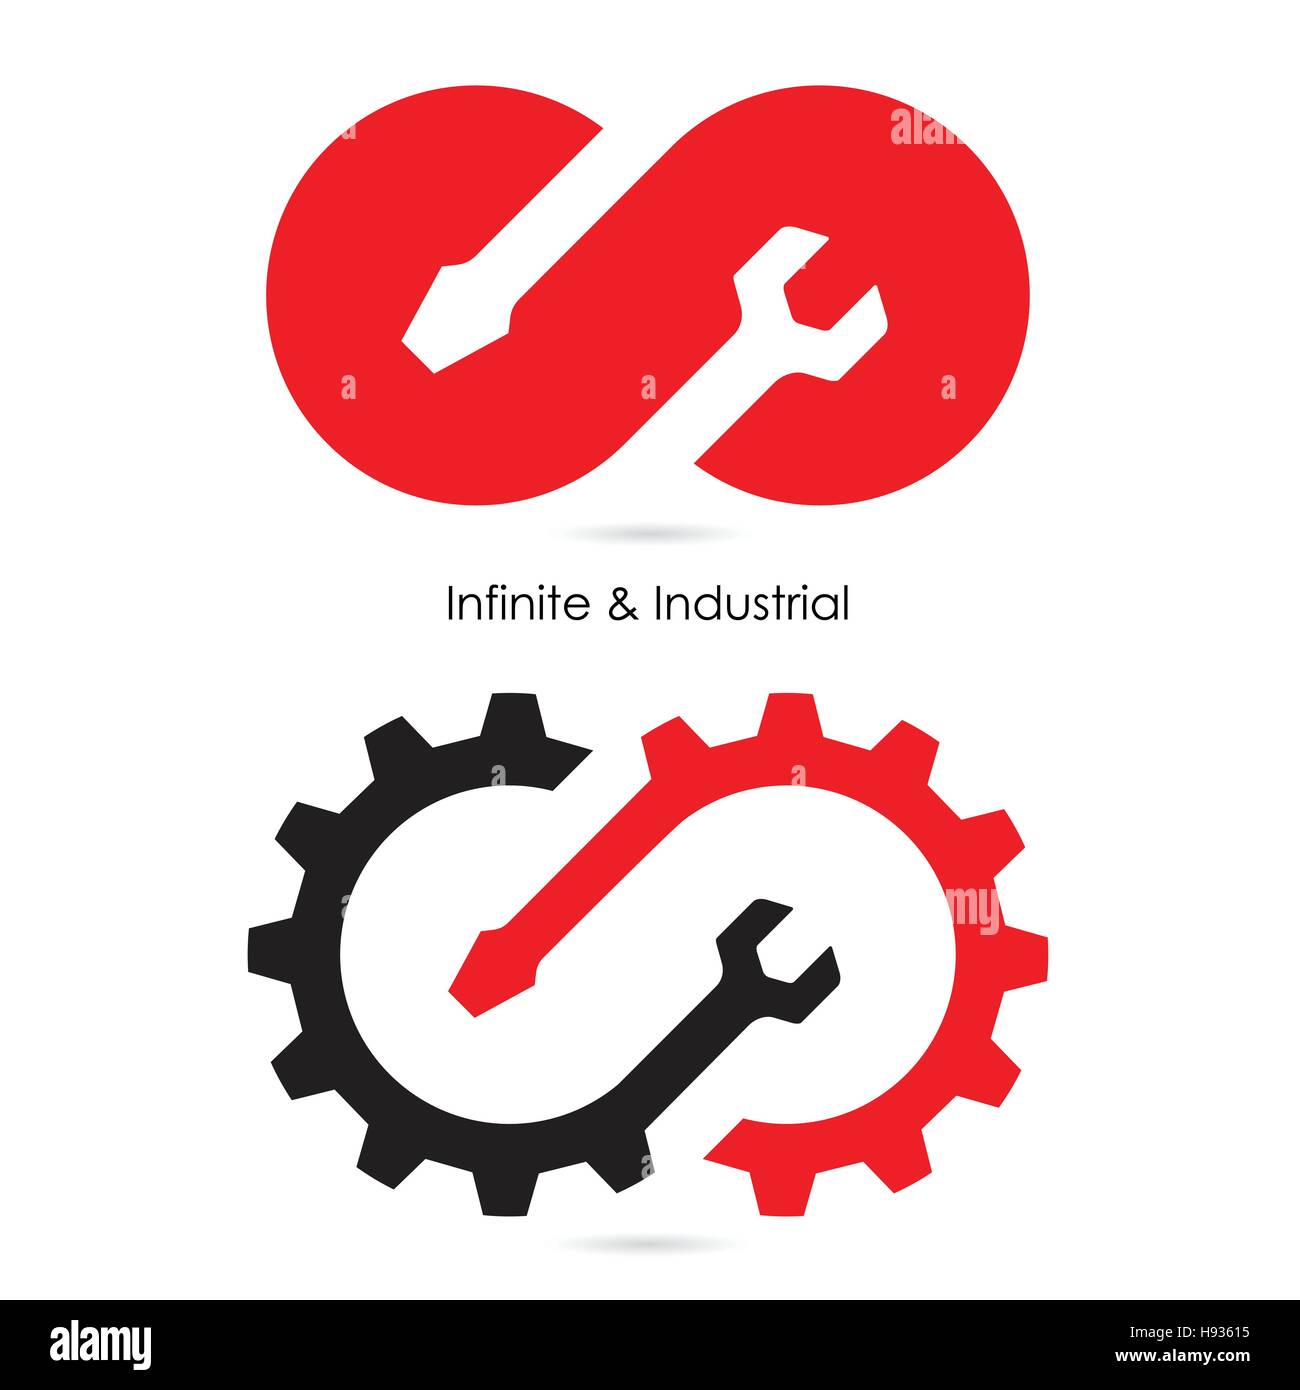 Infinite and Industrial logo.Infinite repair logo elements design.Maintenance service,engineering creative symbol.Business,industrial concept.Vector i Stock Vector